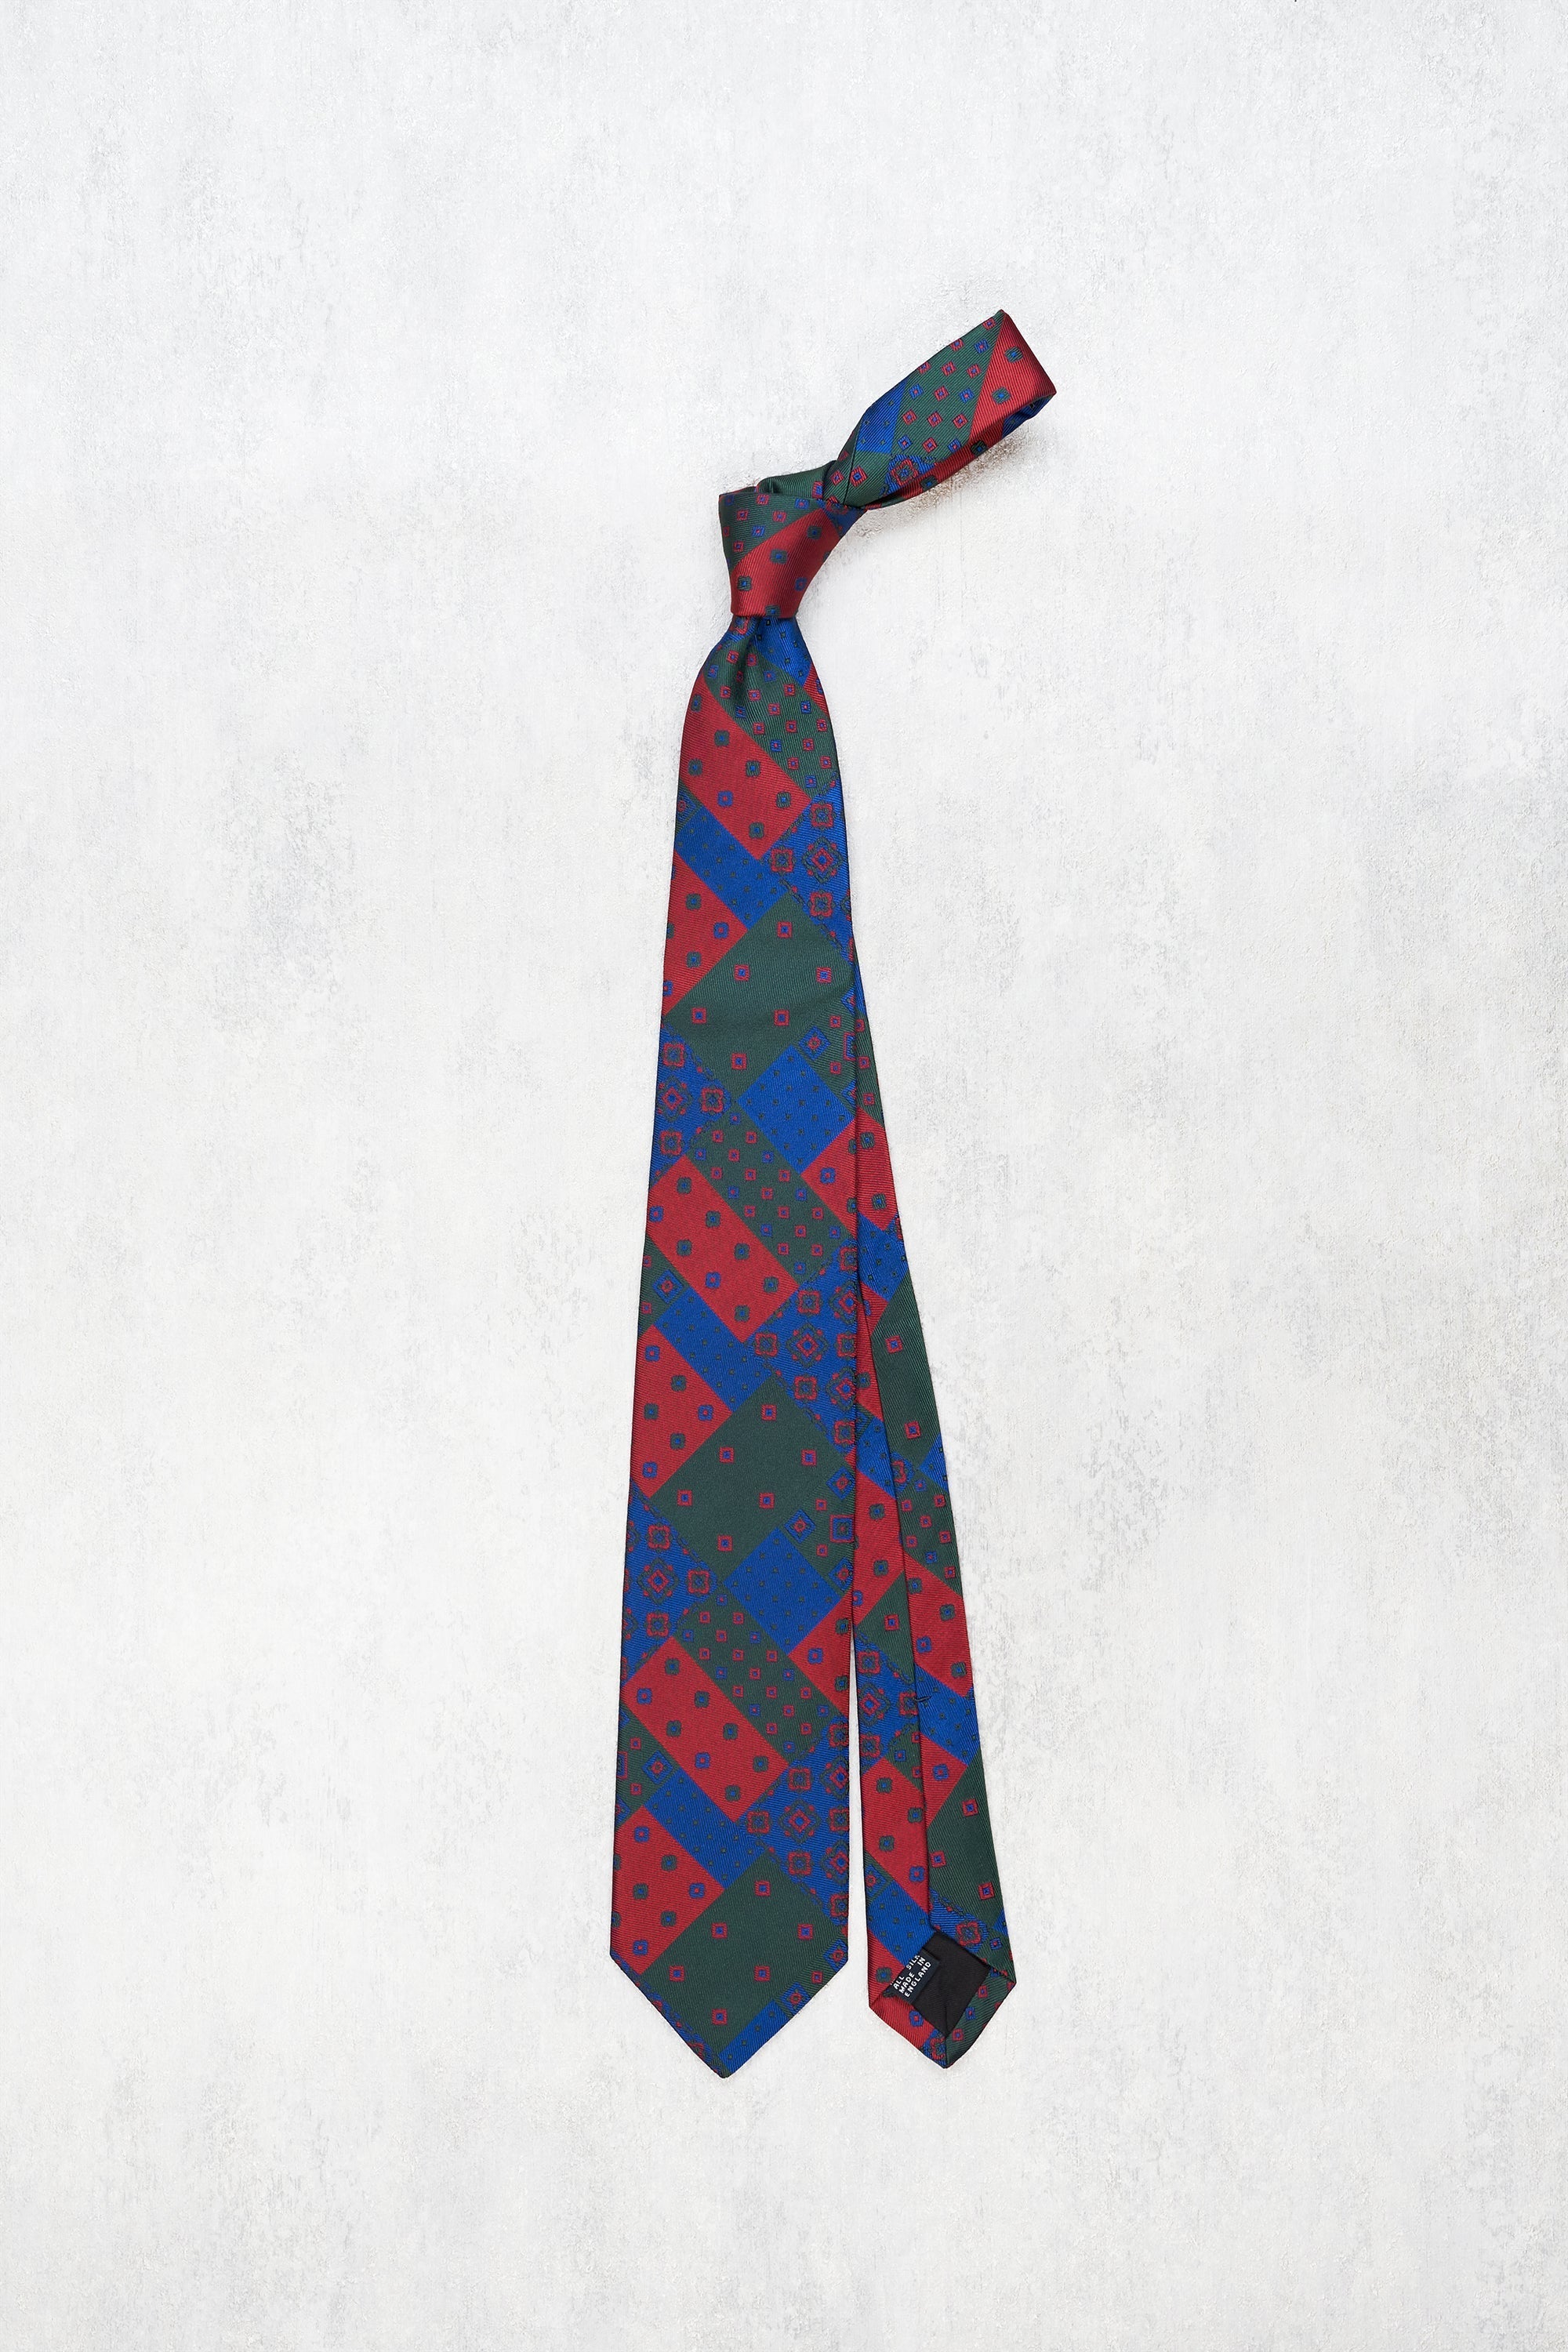 Drake's Red/Green/Blue Rectangle Pattern Silk Tie